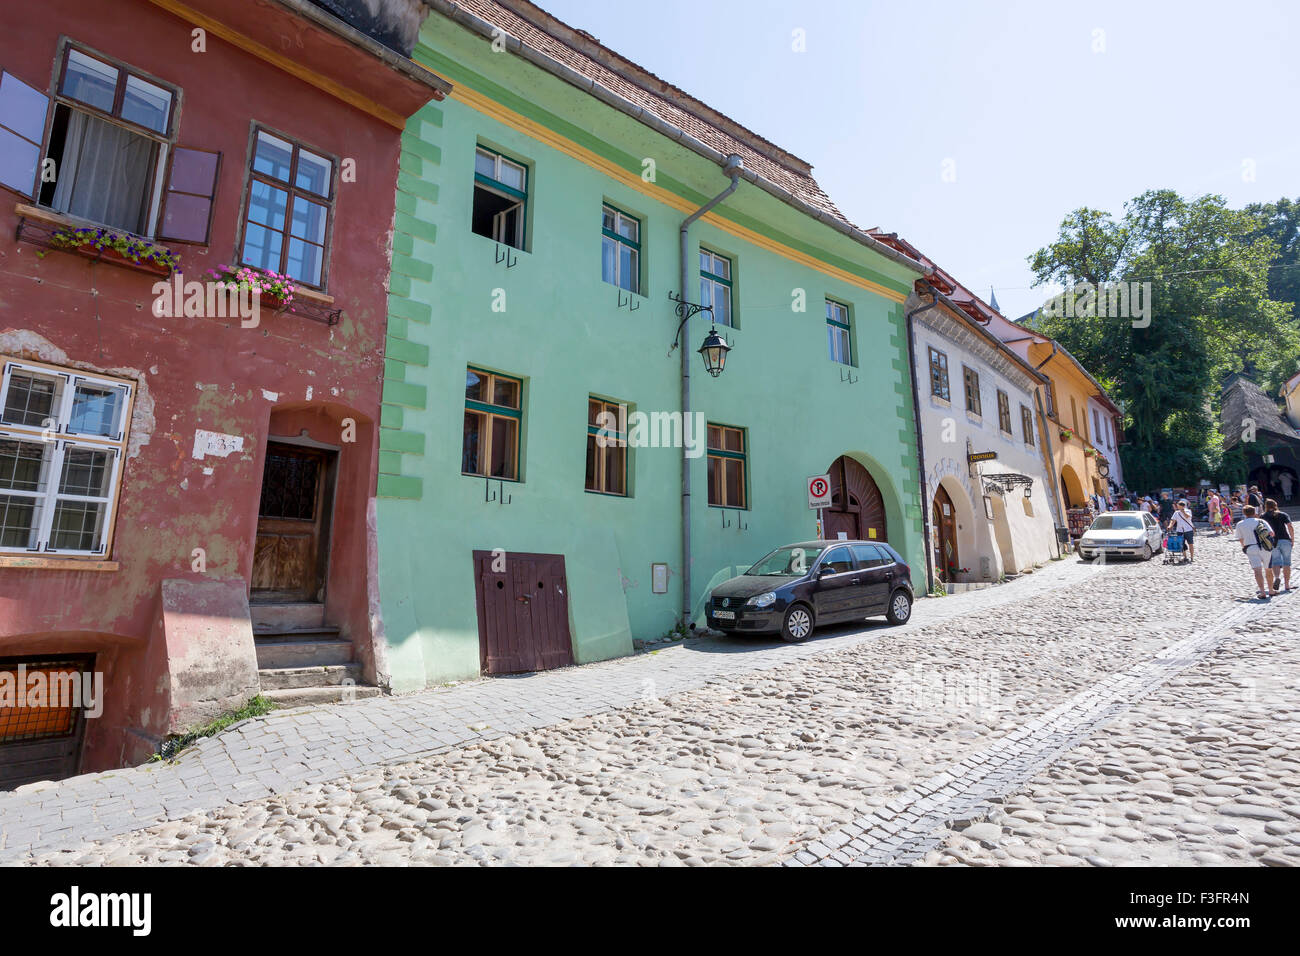 Street scene in Sighisoara, Transylvania, Romania Stock Photo